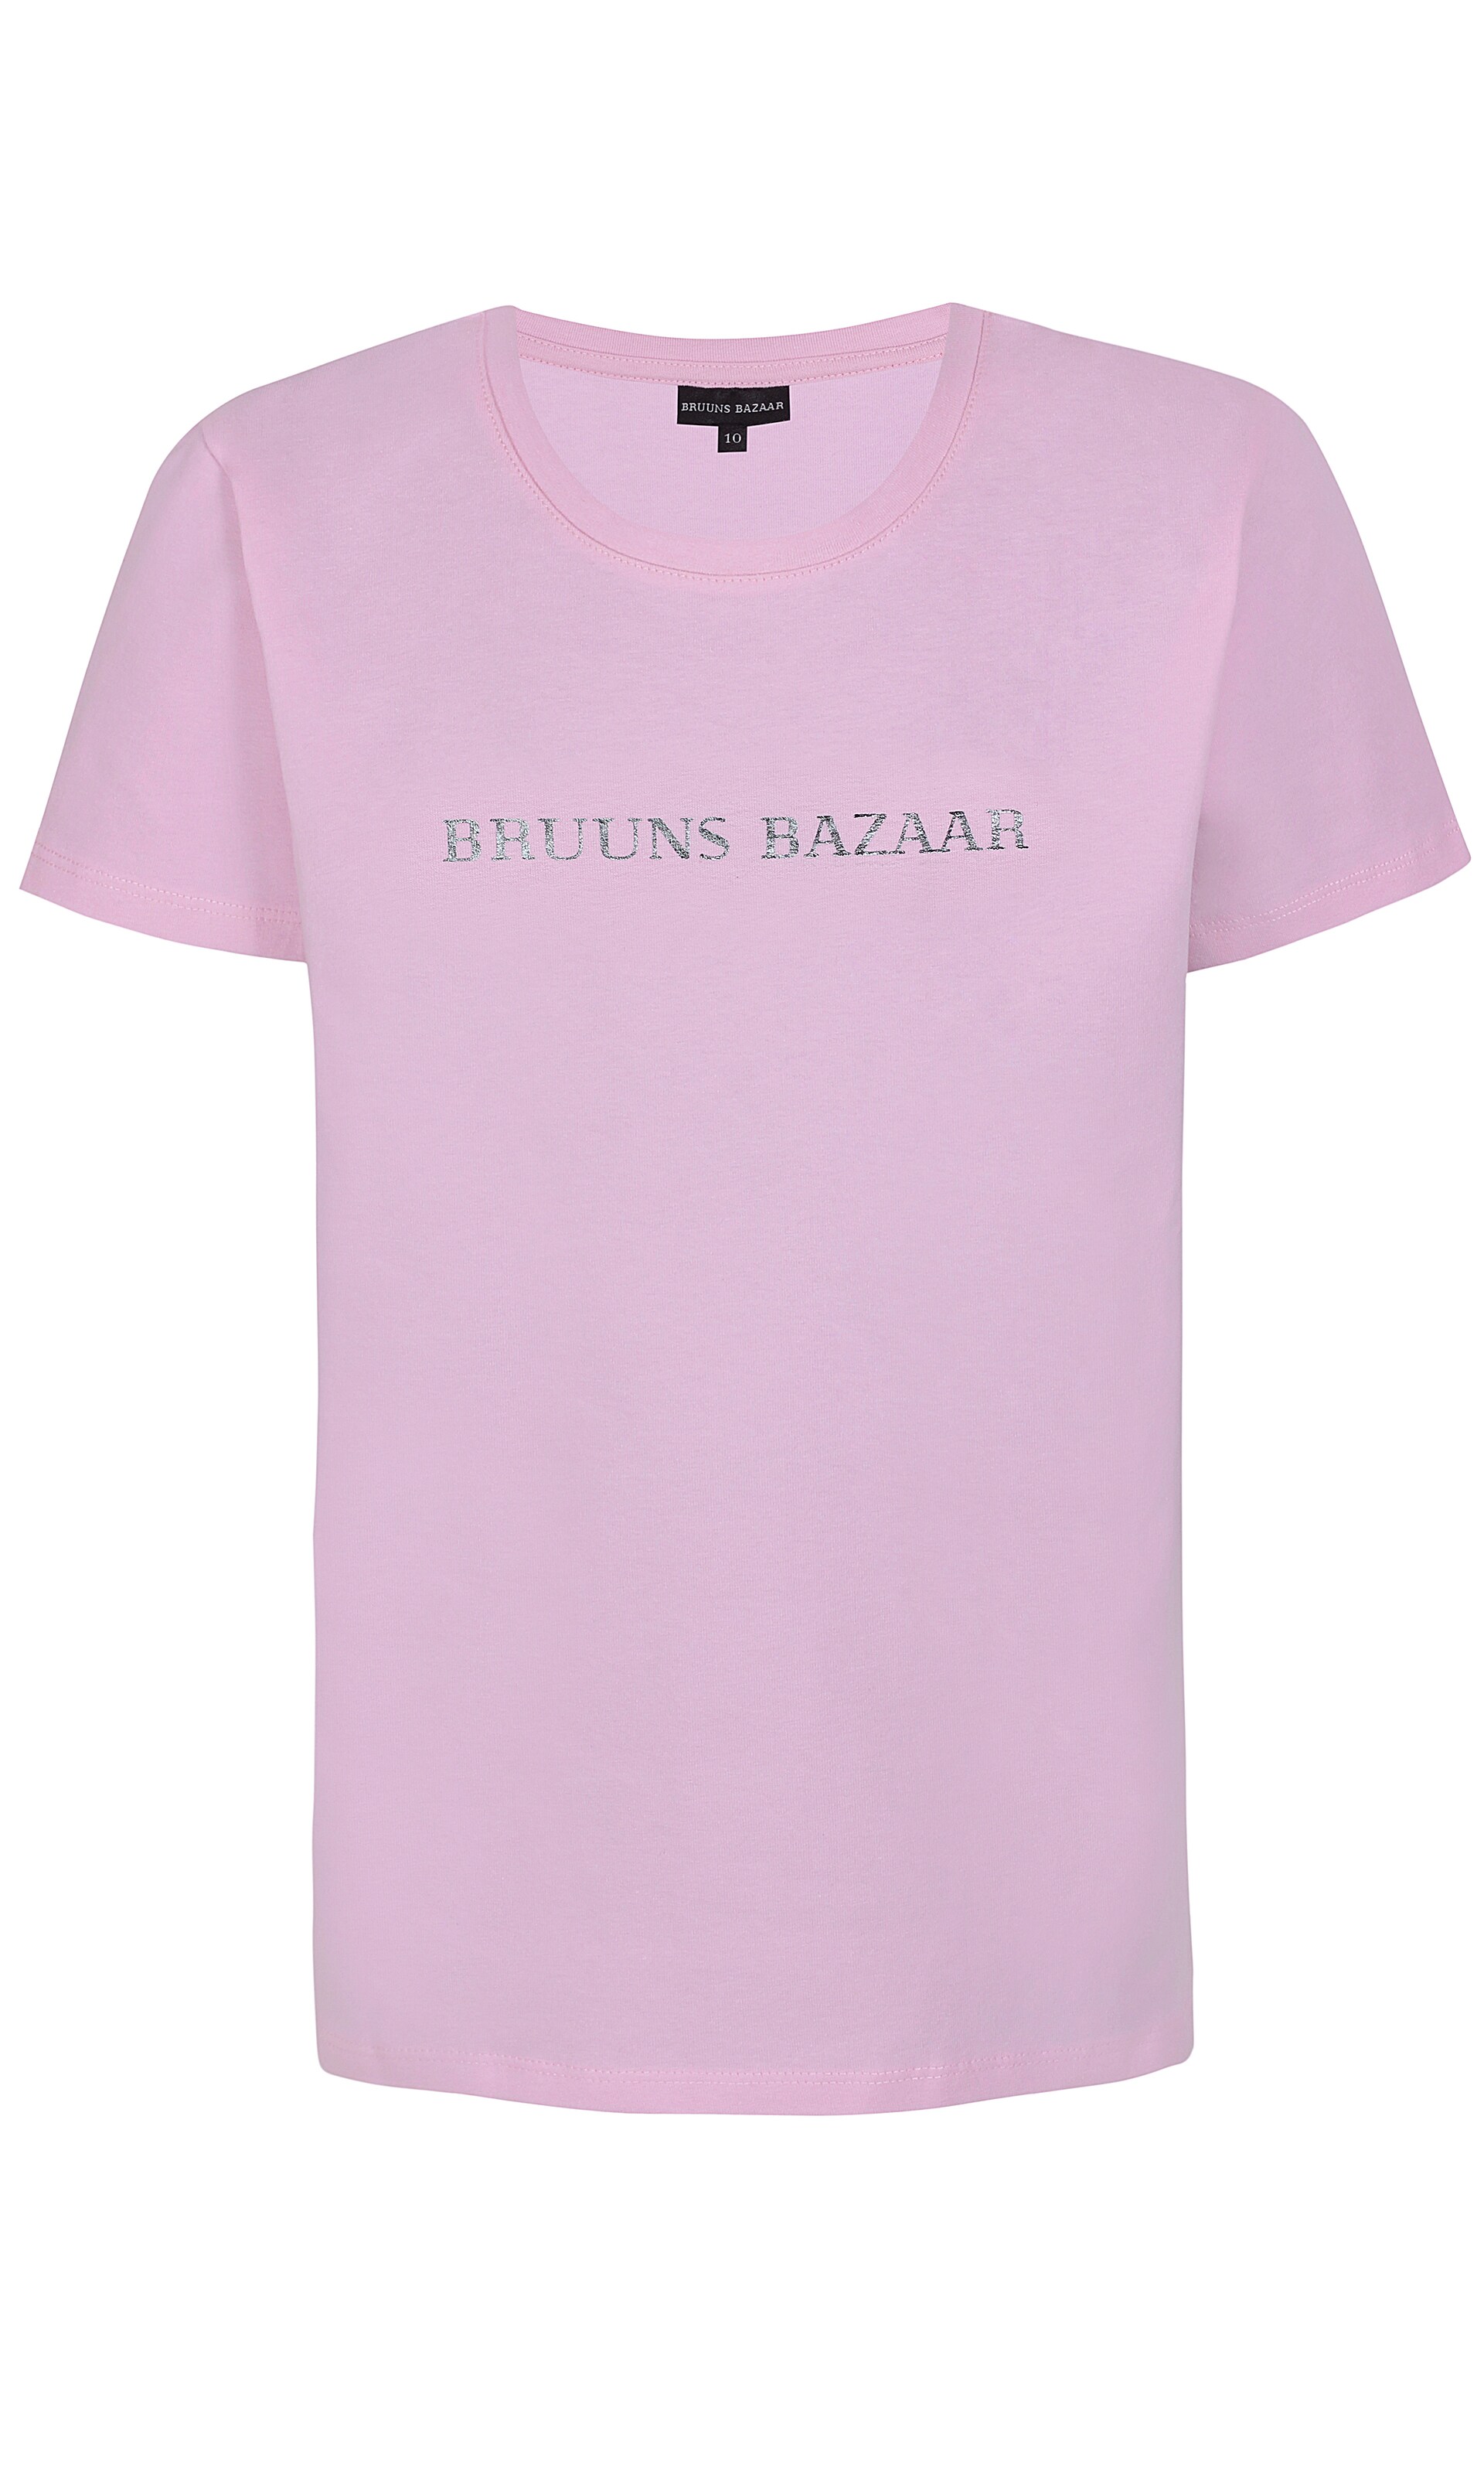 Bruuns Bazaar Kids T-Shirt 128 Rose